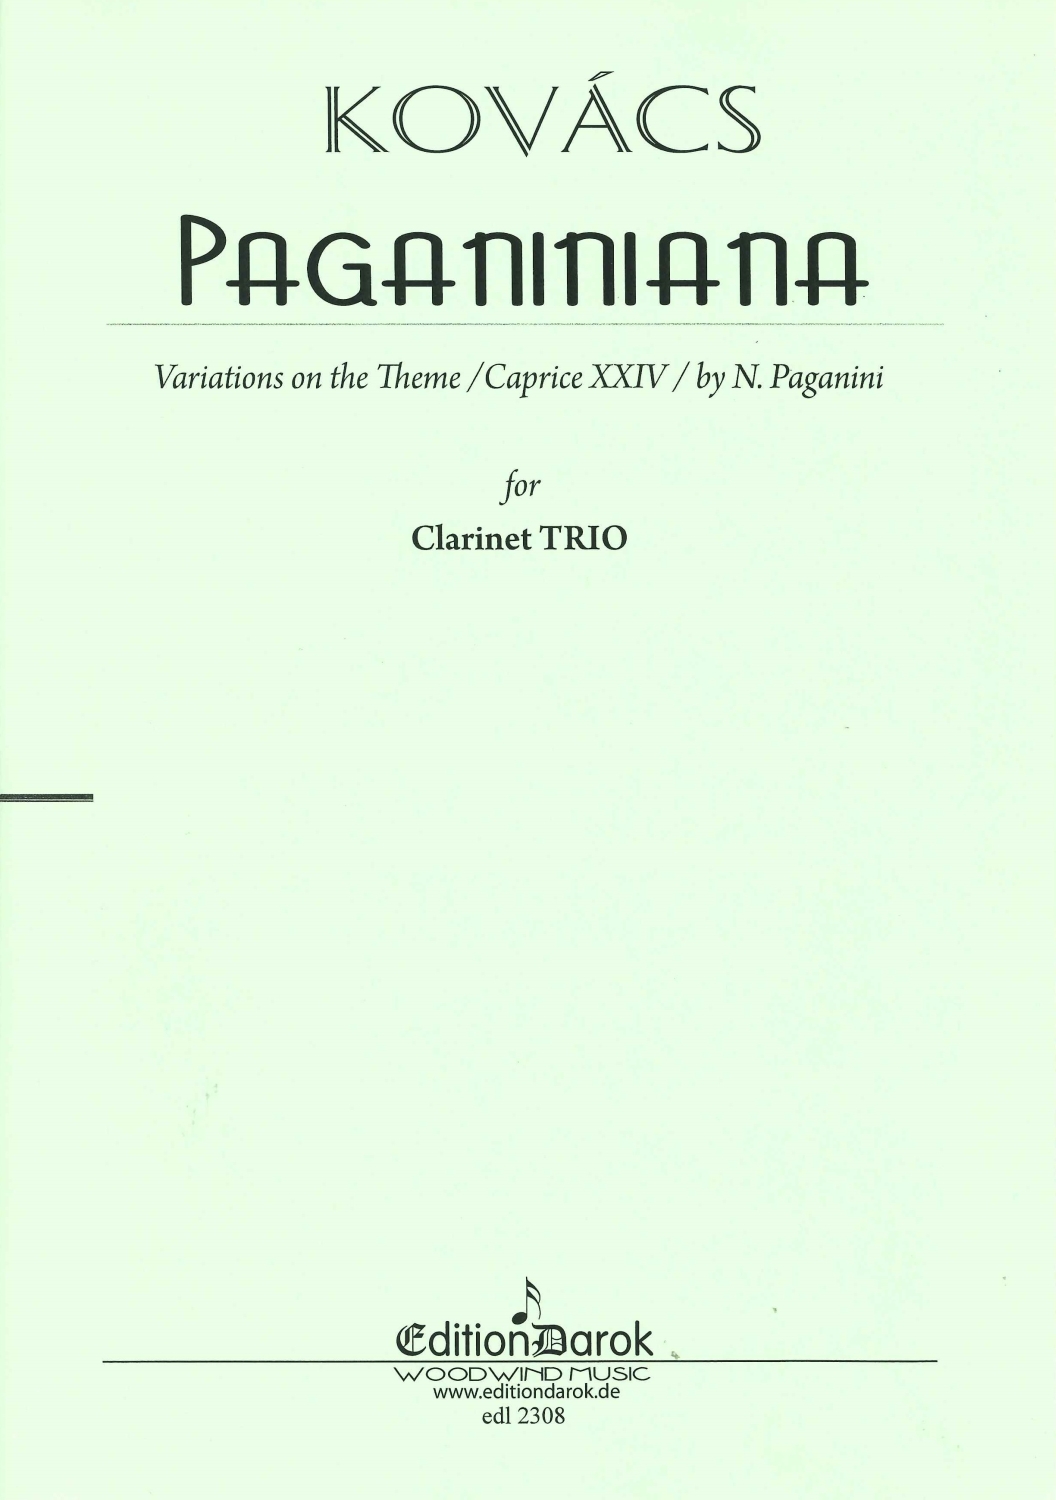 bela-kovacs-paganiniana-3clr-_pst_-_0001.JPG